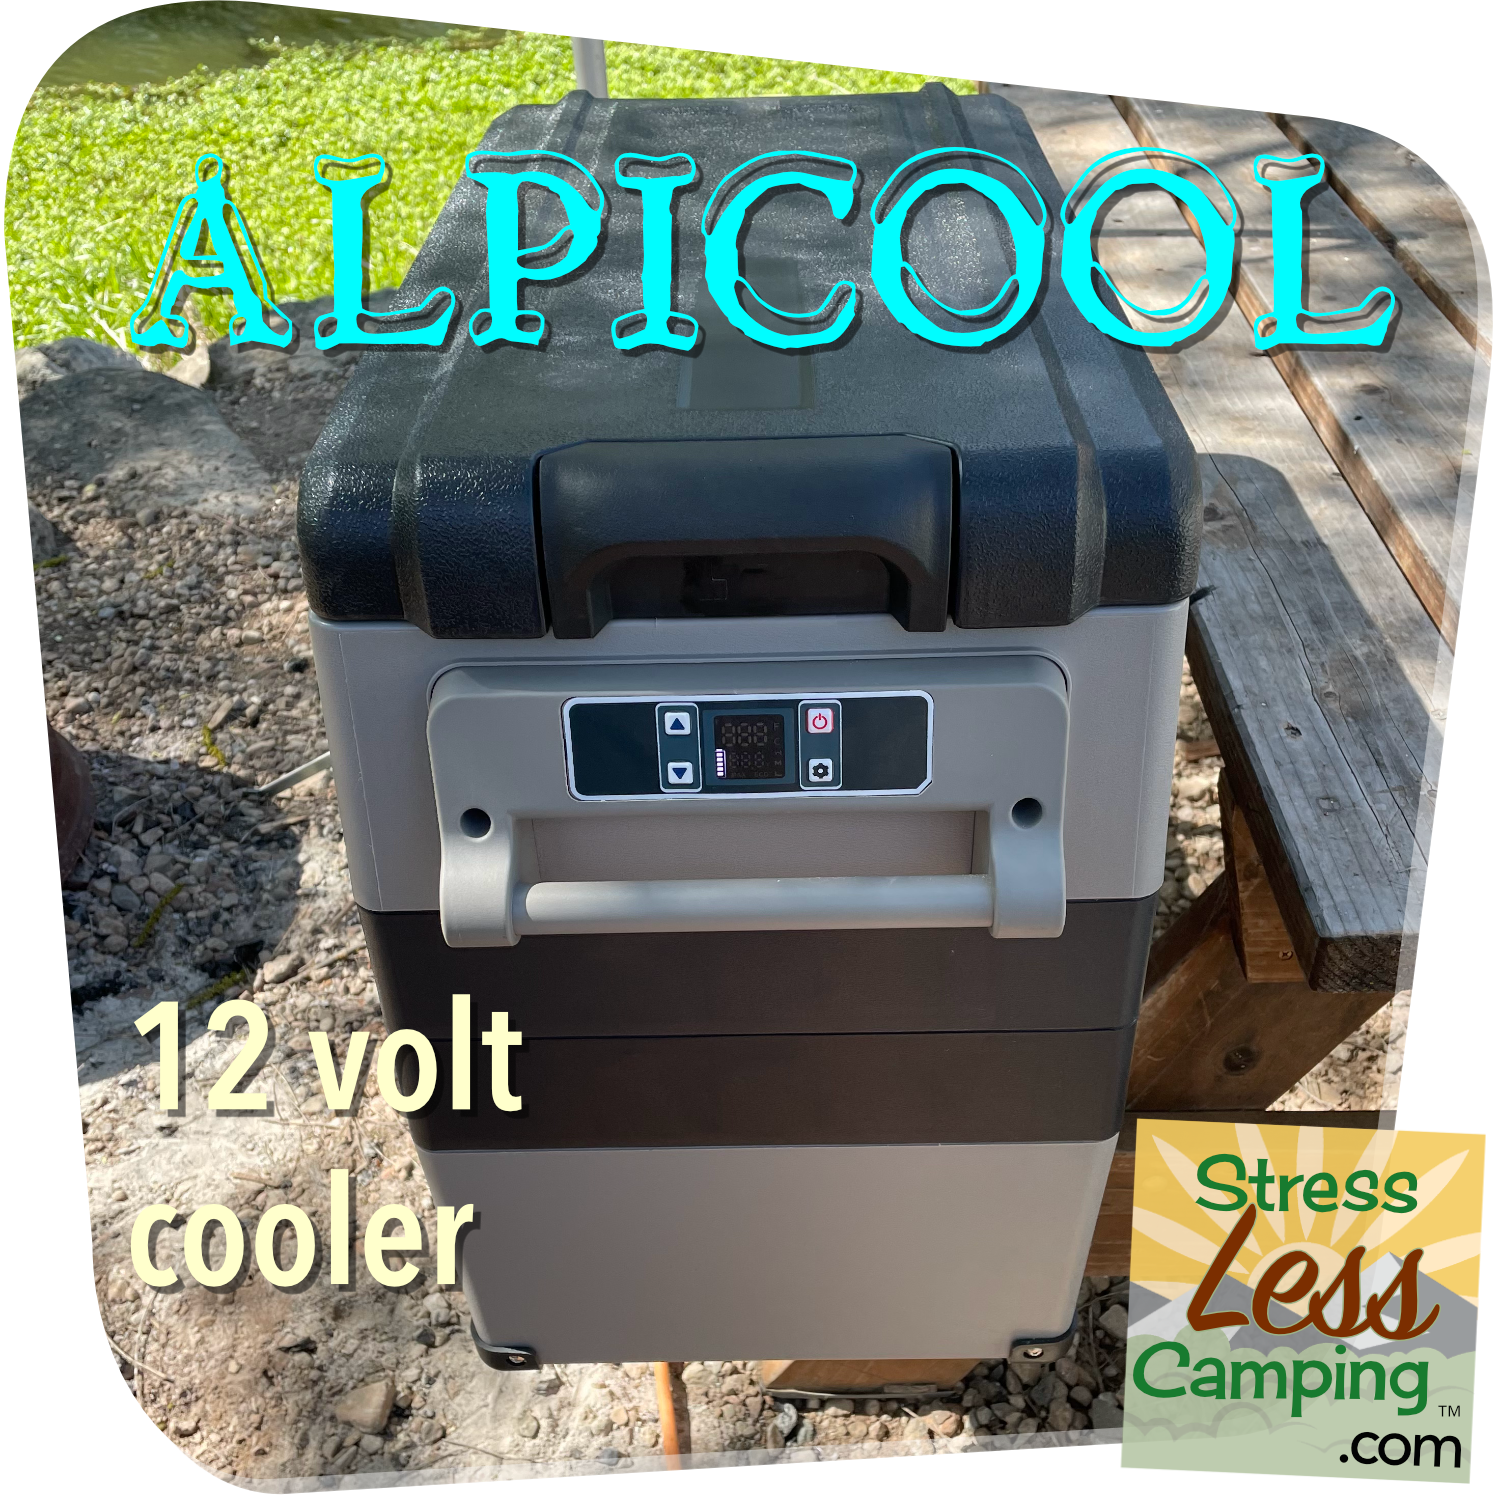 Alpicool 55 quart 12 volt cooler review - StressLess Camping  RV Camping  community, resources, tips, tricks, discounts & hacks